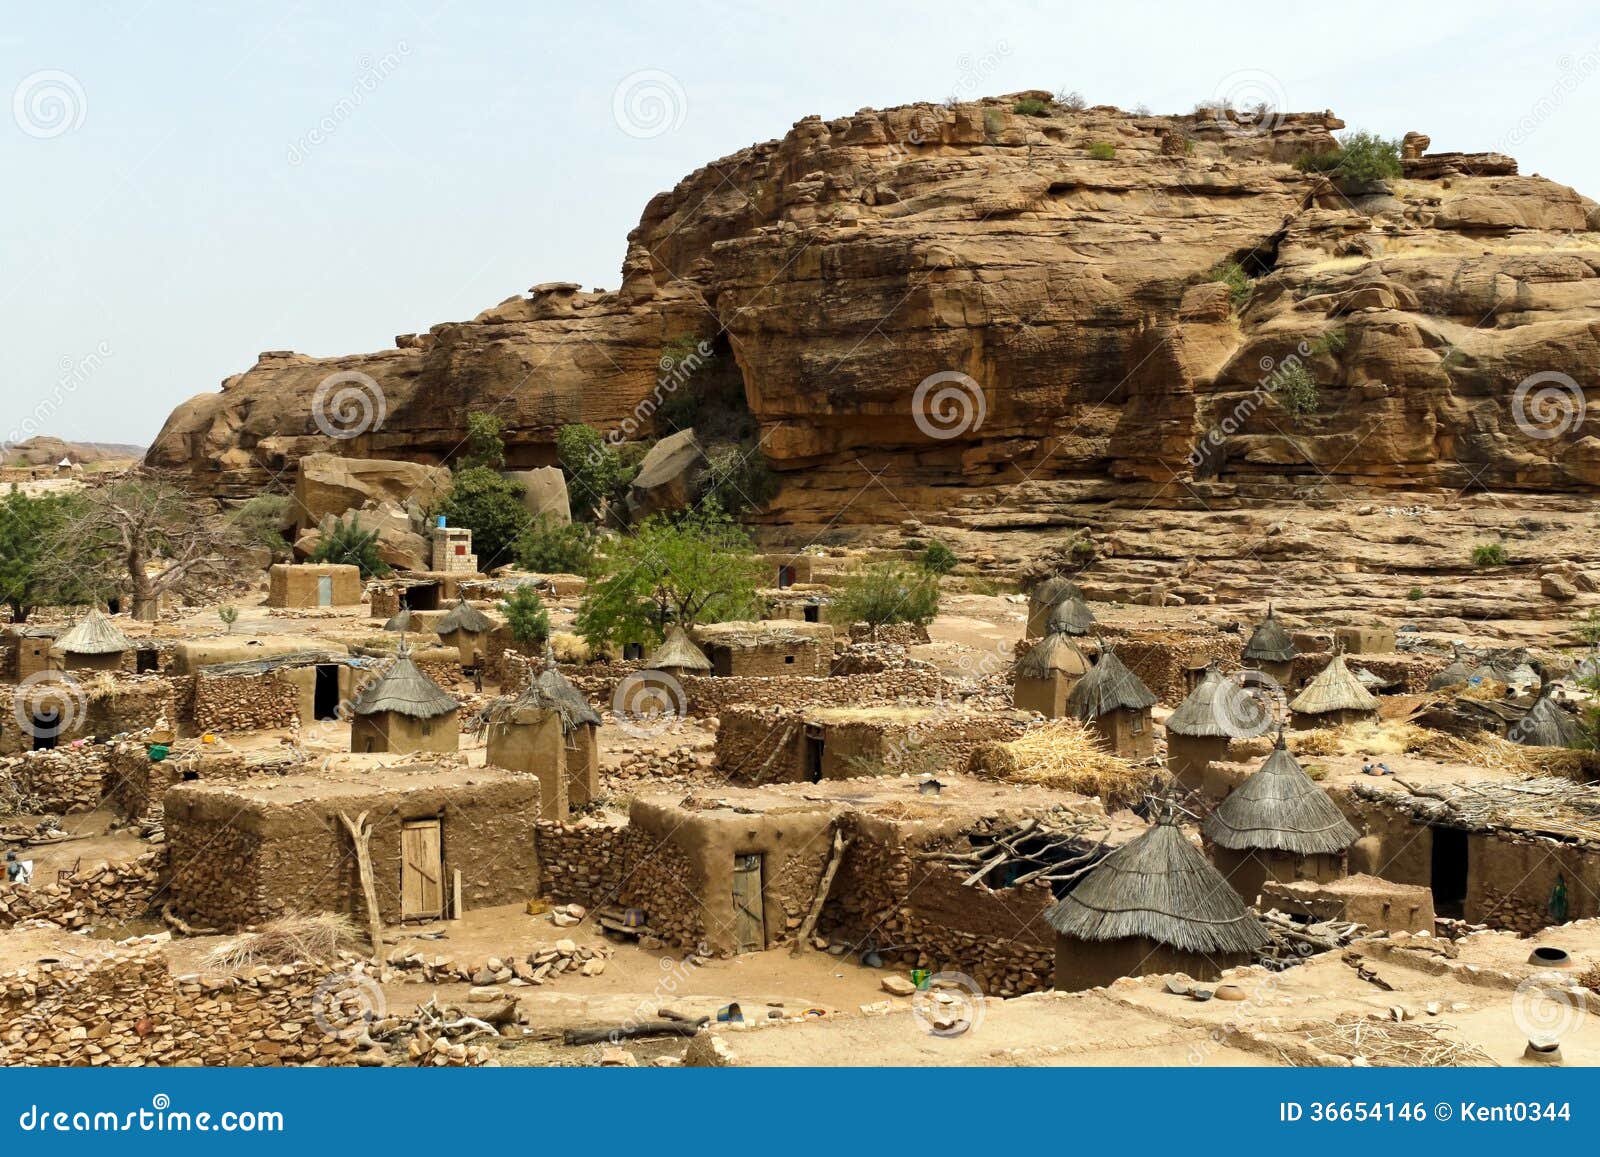 desert cliff dogon village world heritage sites mali west africa 36654146